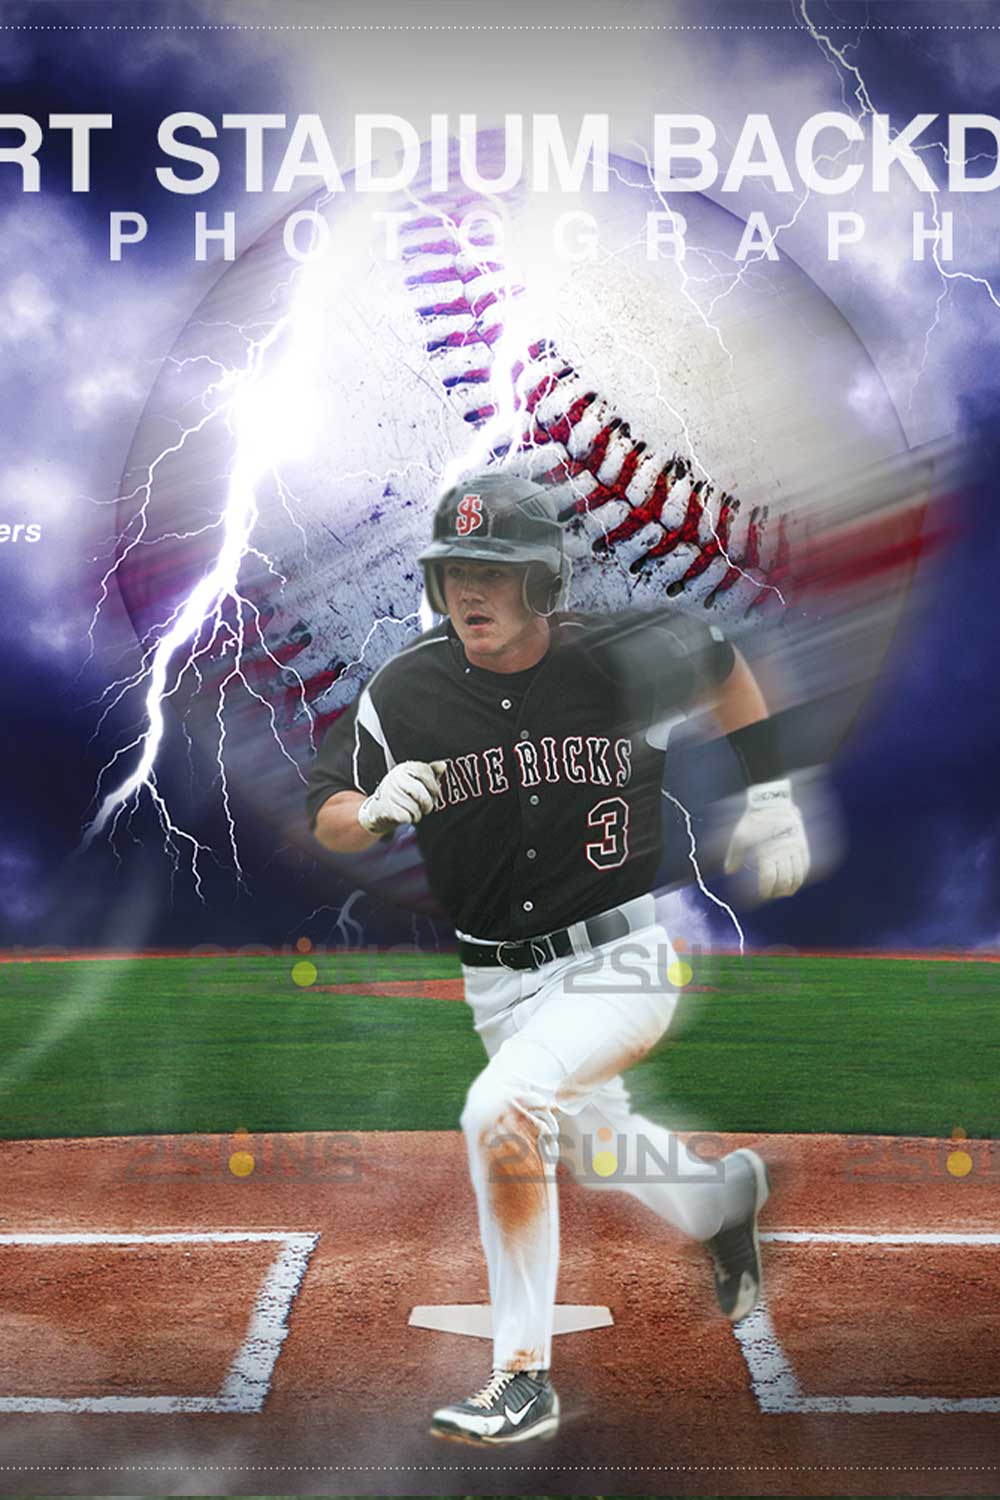 Baseball Backdrop Sports Digital Background Overlay Pinterest Image.